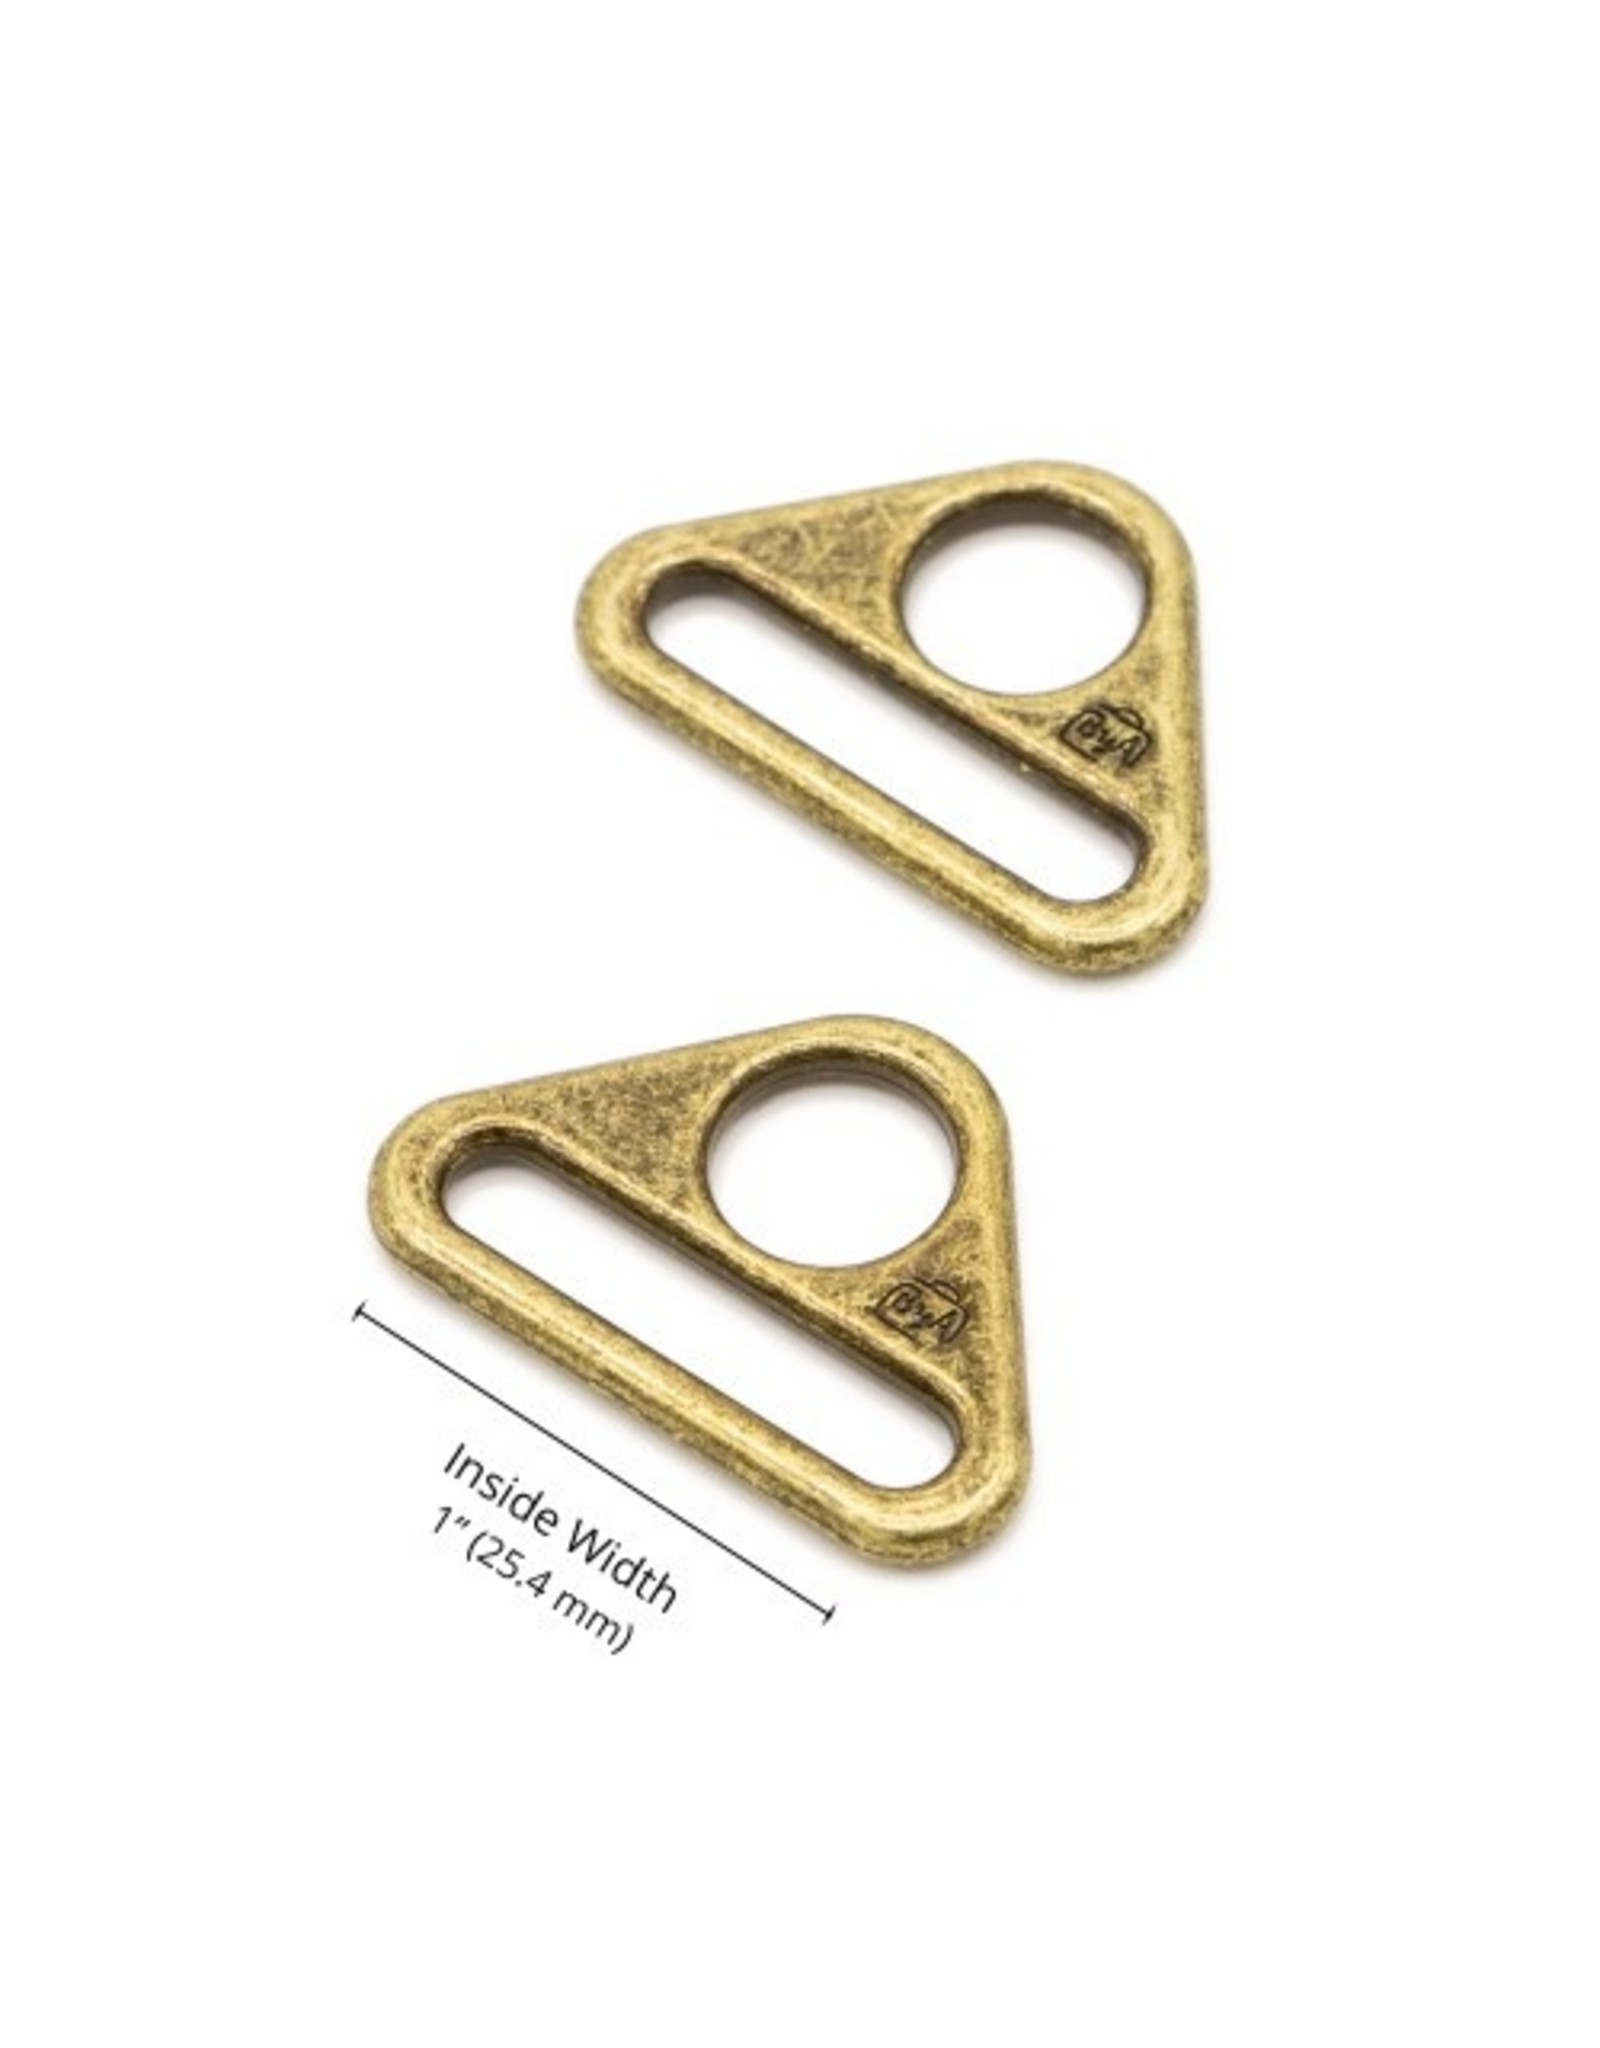 ByAnnie Triangle Ring - 1 inch - Antique Brass